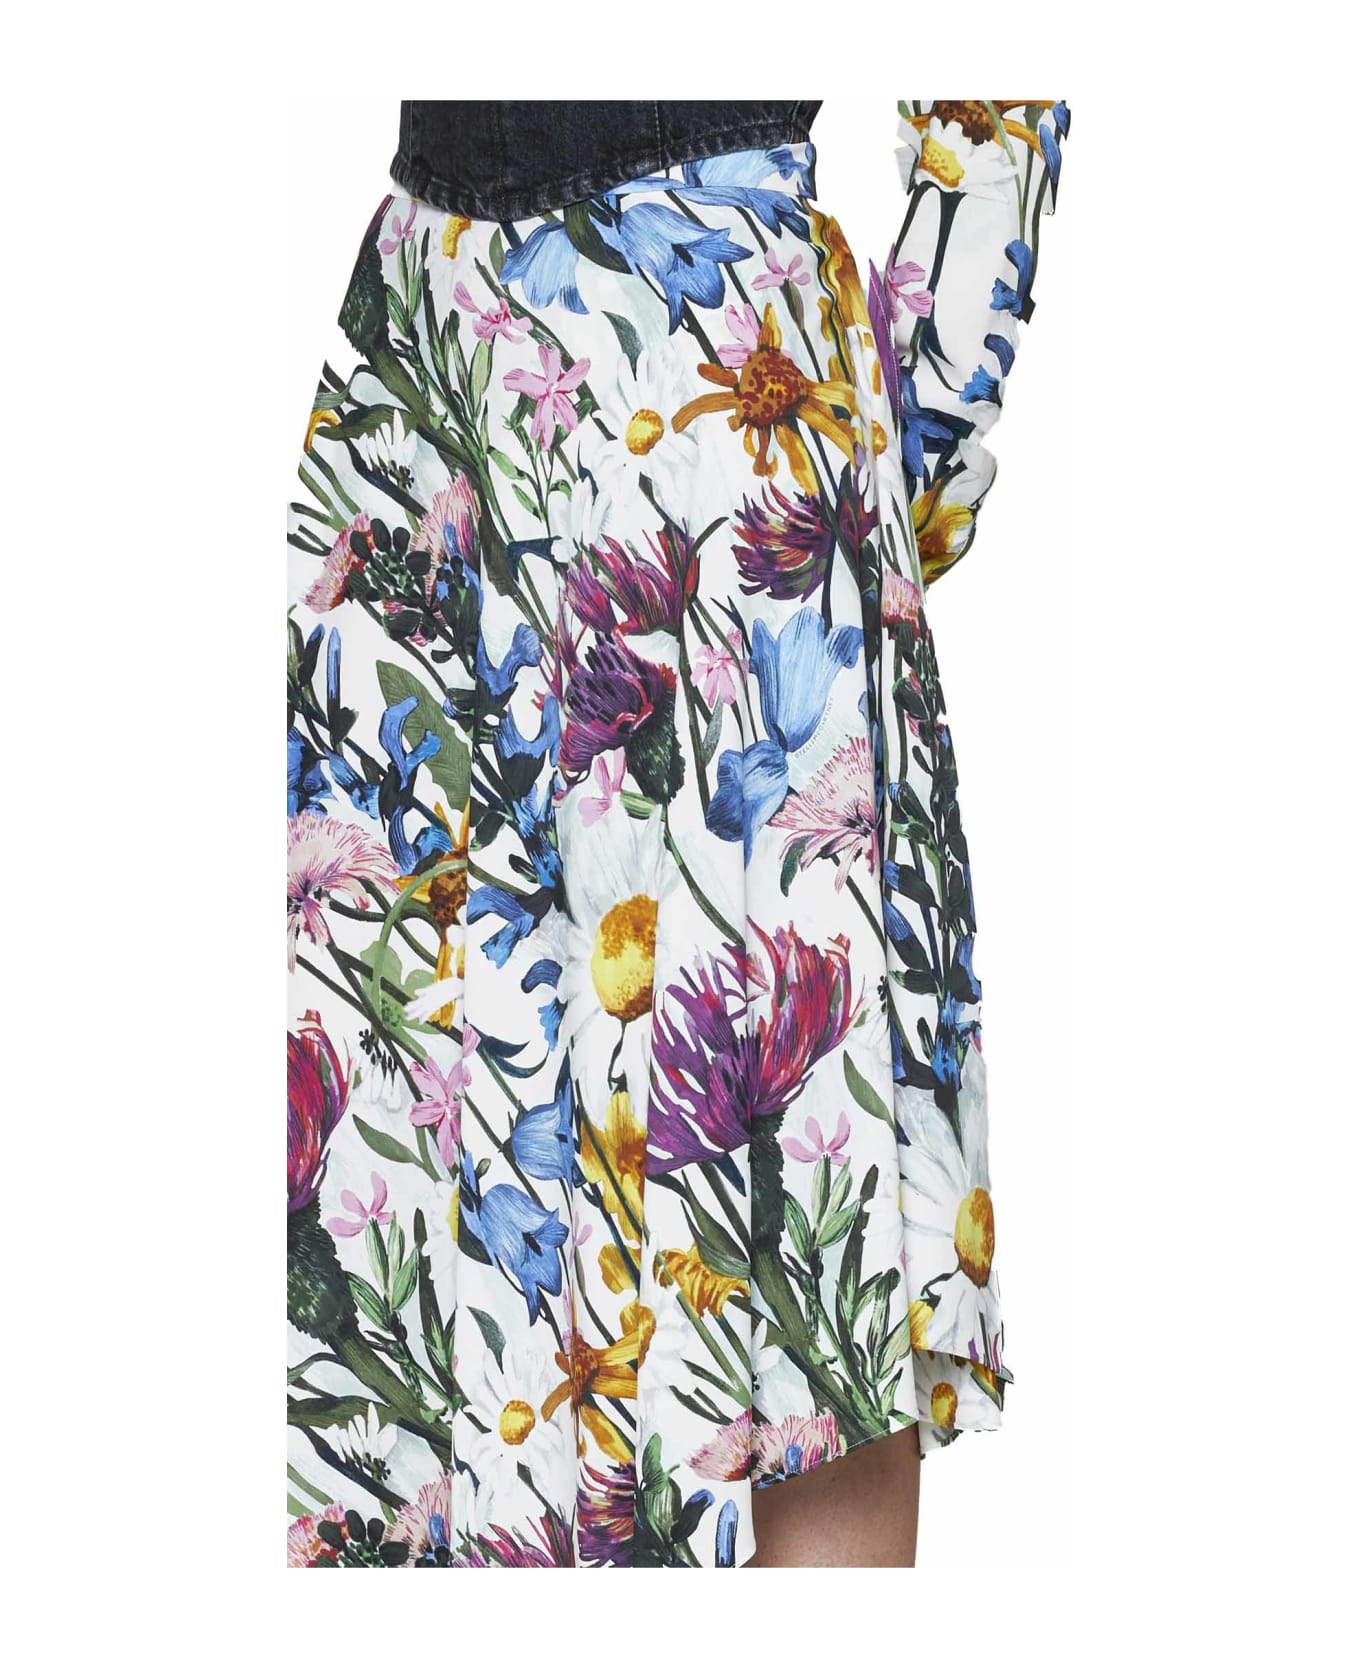 Stella McCartney Rewild Floral Print Skirt - Multicolor